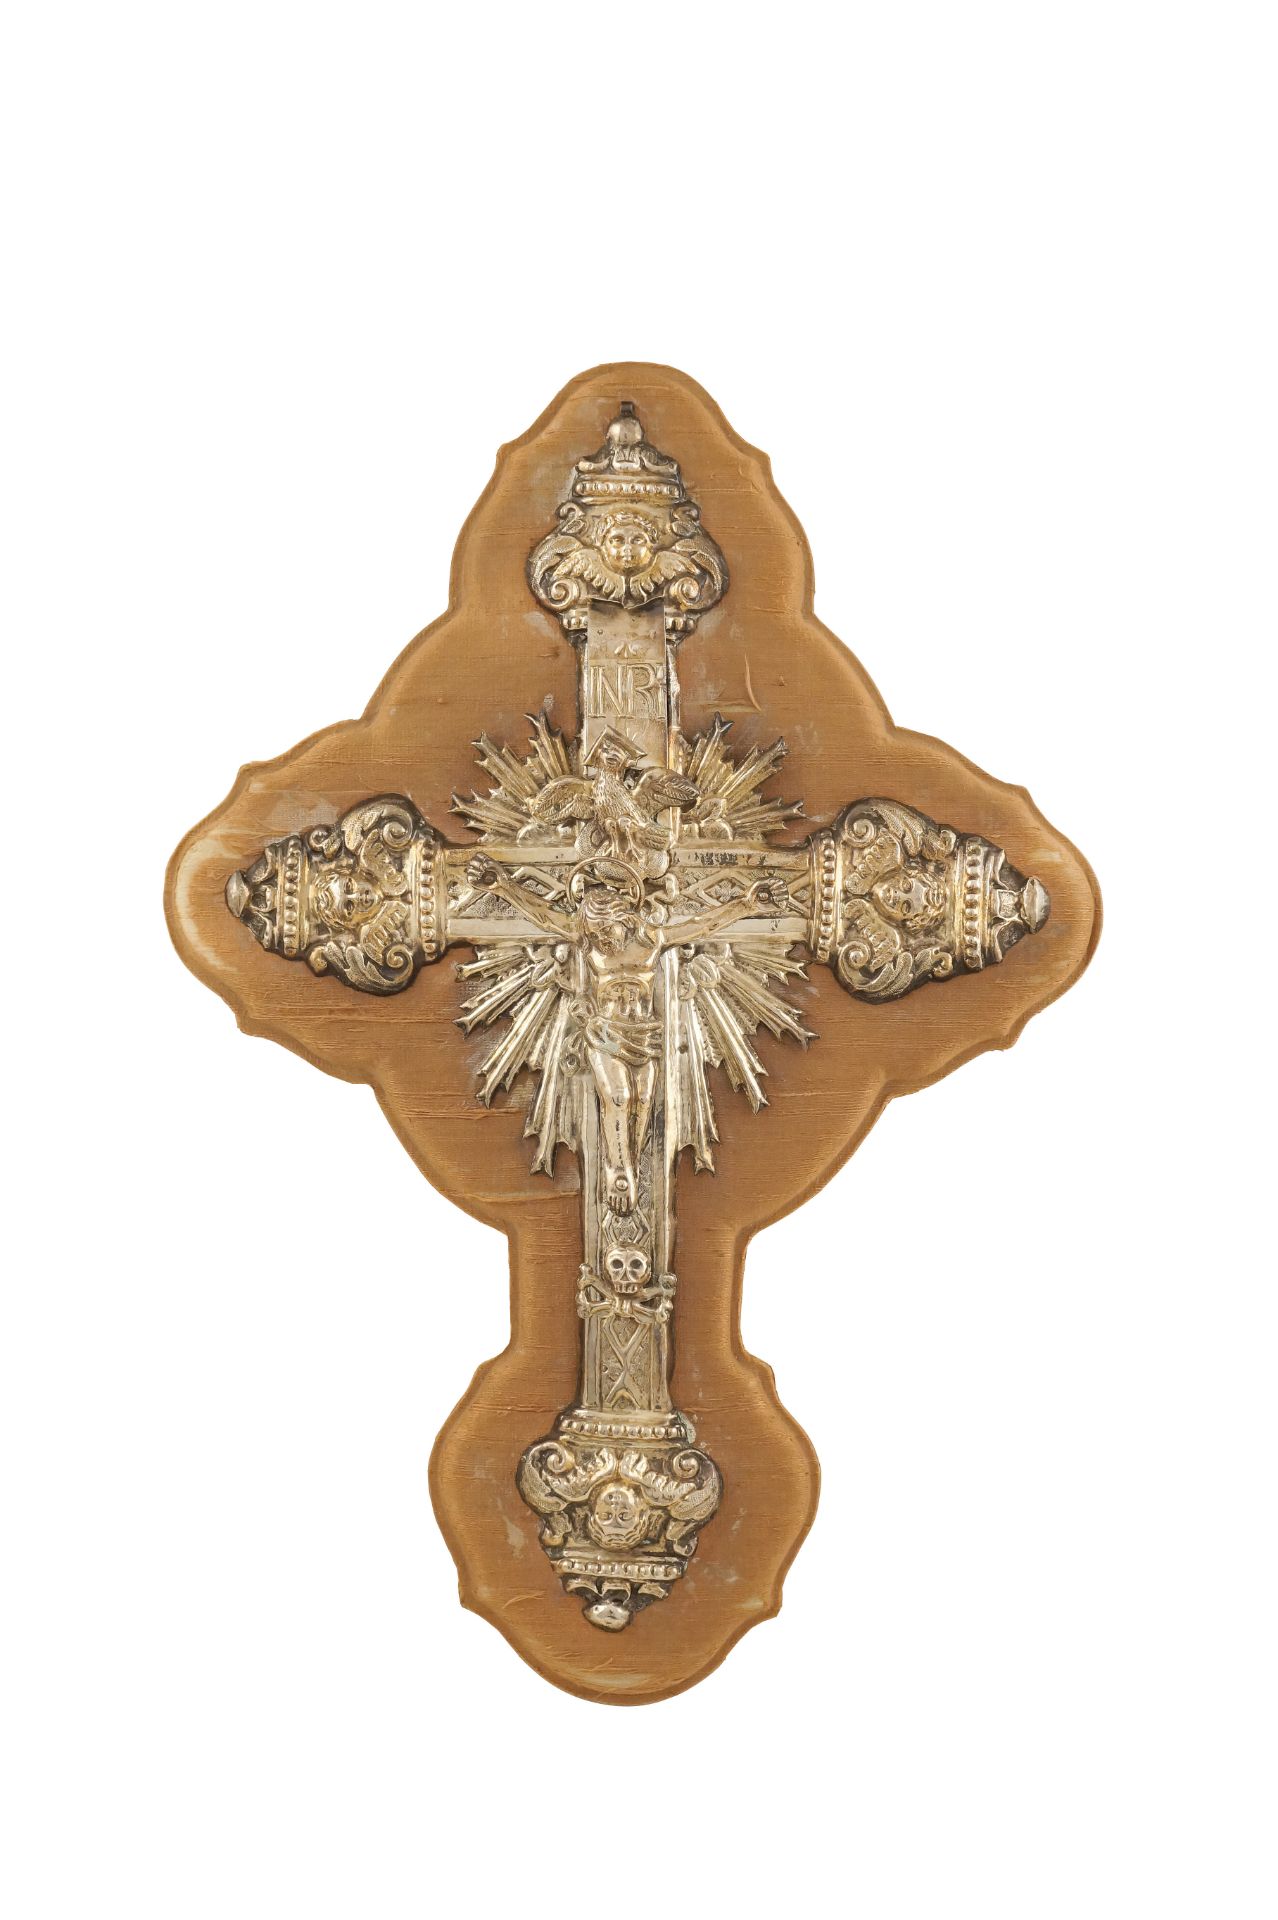 An Italian silver crucifix